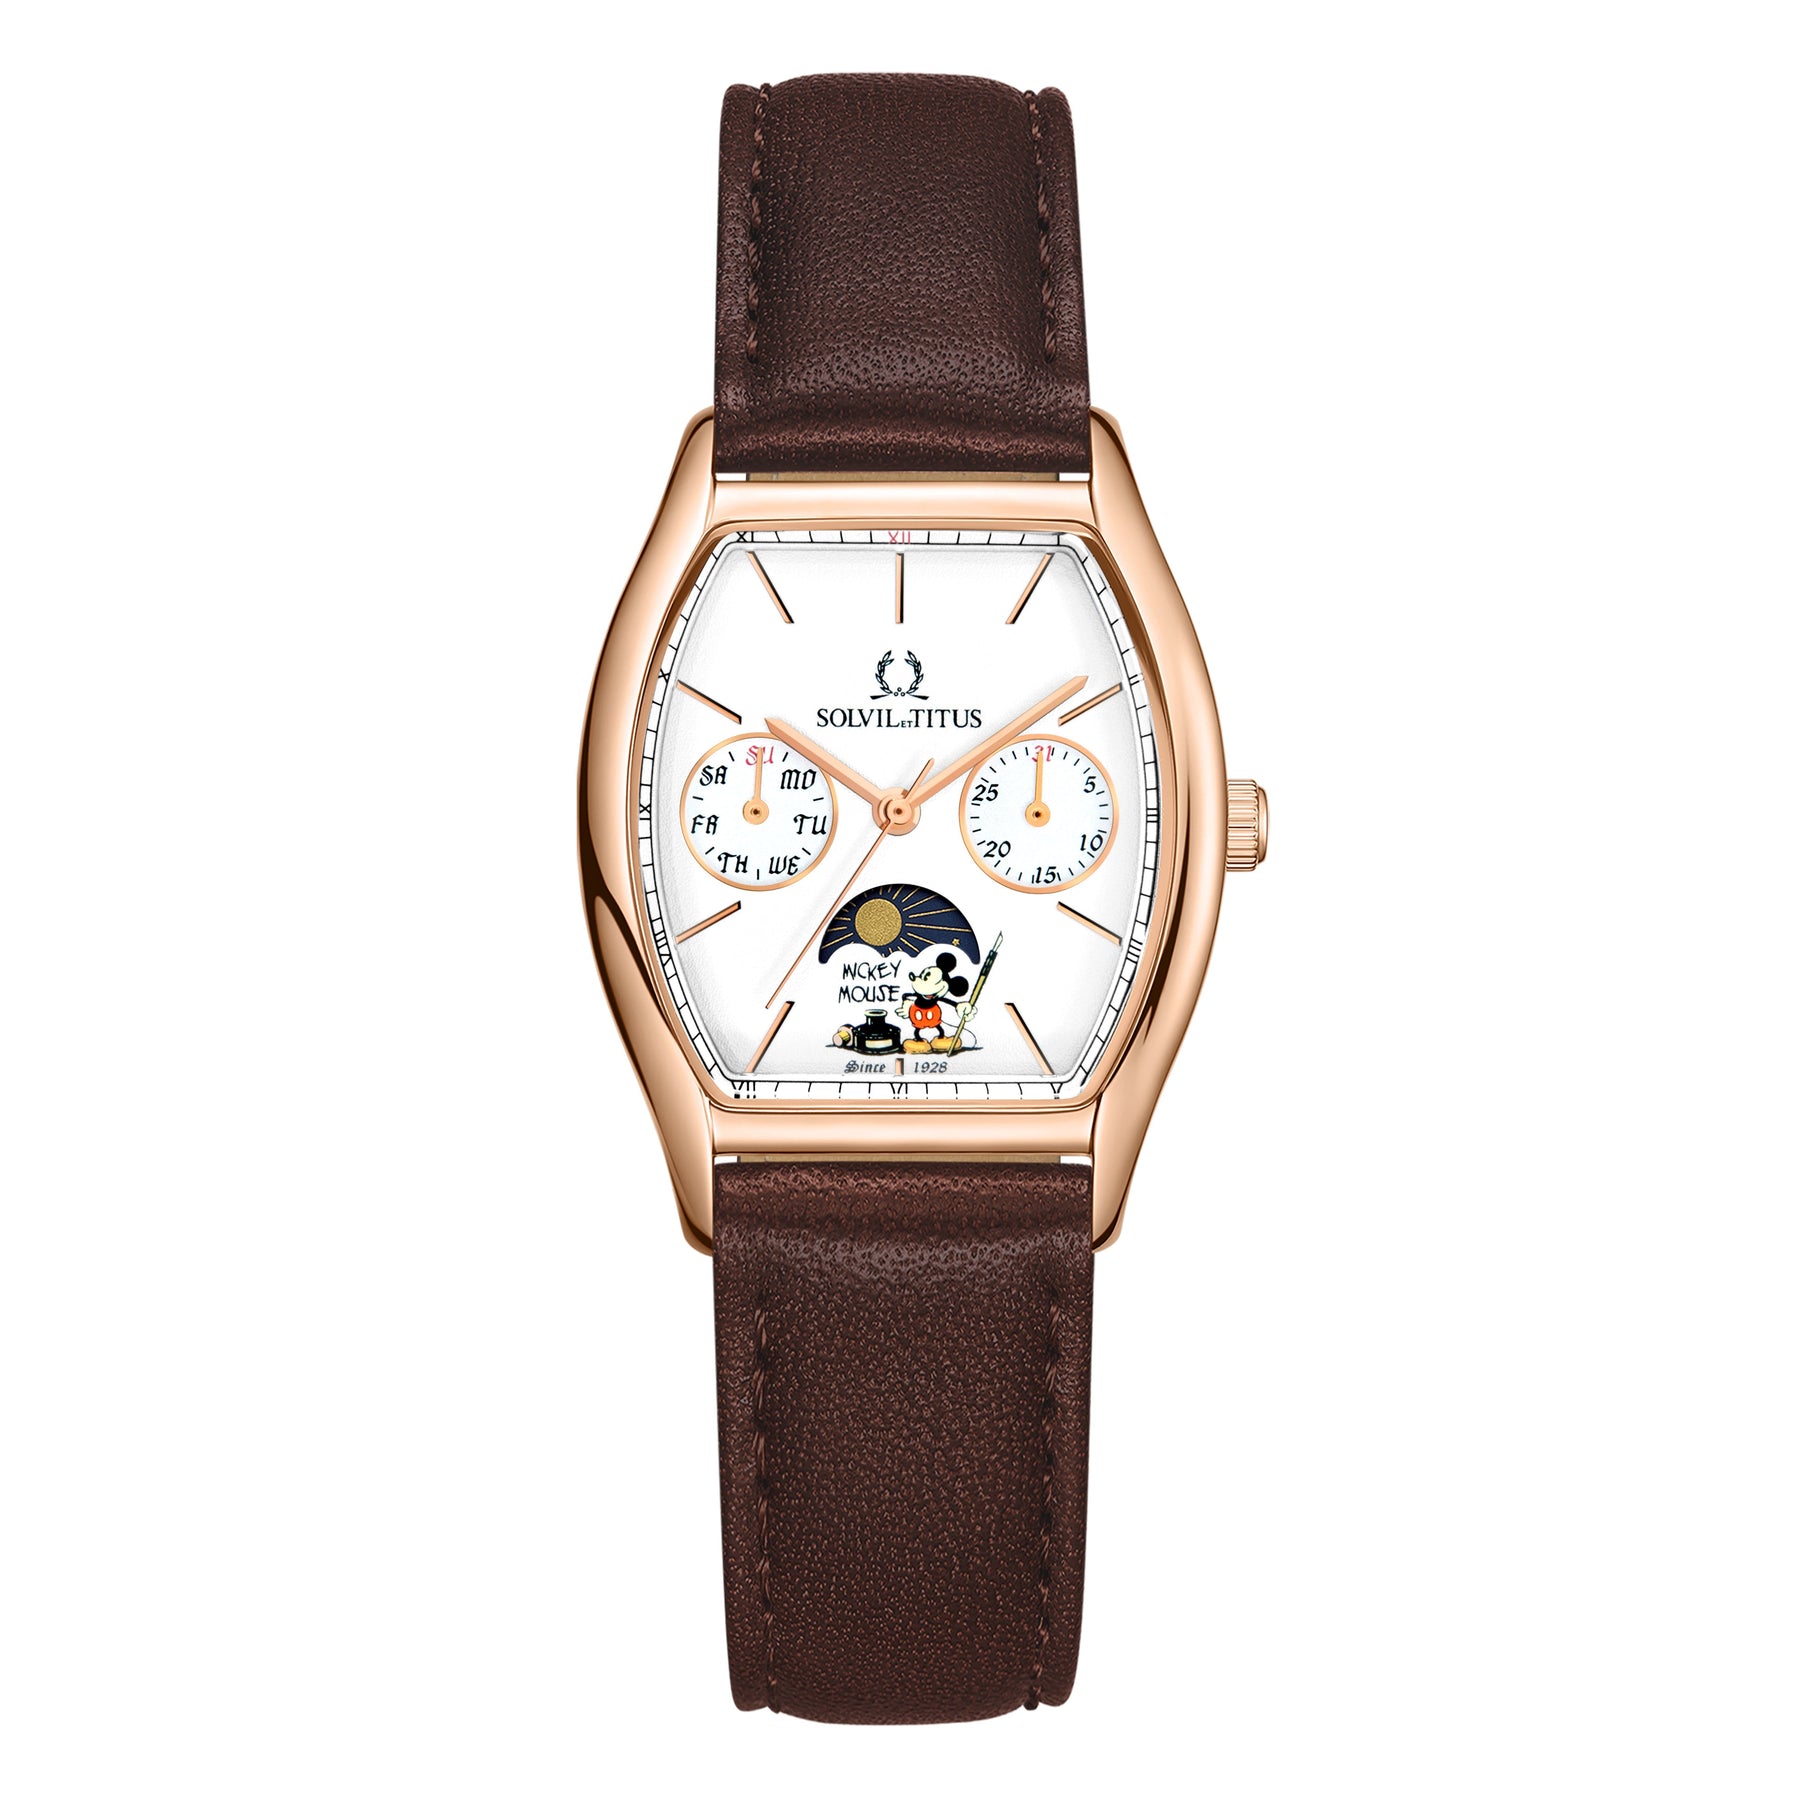 [Pre-Order] คอลเลกชัน Barista “Mickey Mouse 95th Anniversary” นาฬิกาผู้หญิง ลิมิเตดอิดิชัน เรือนสีโรสโกลด์ มัลติฟังก์ชัน บอกกลางวัน-กลางคืน ระบบควอตซ์ สายหนัง ขนาดตัวเรือน 31 มม. (W06-03356-002)